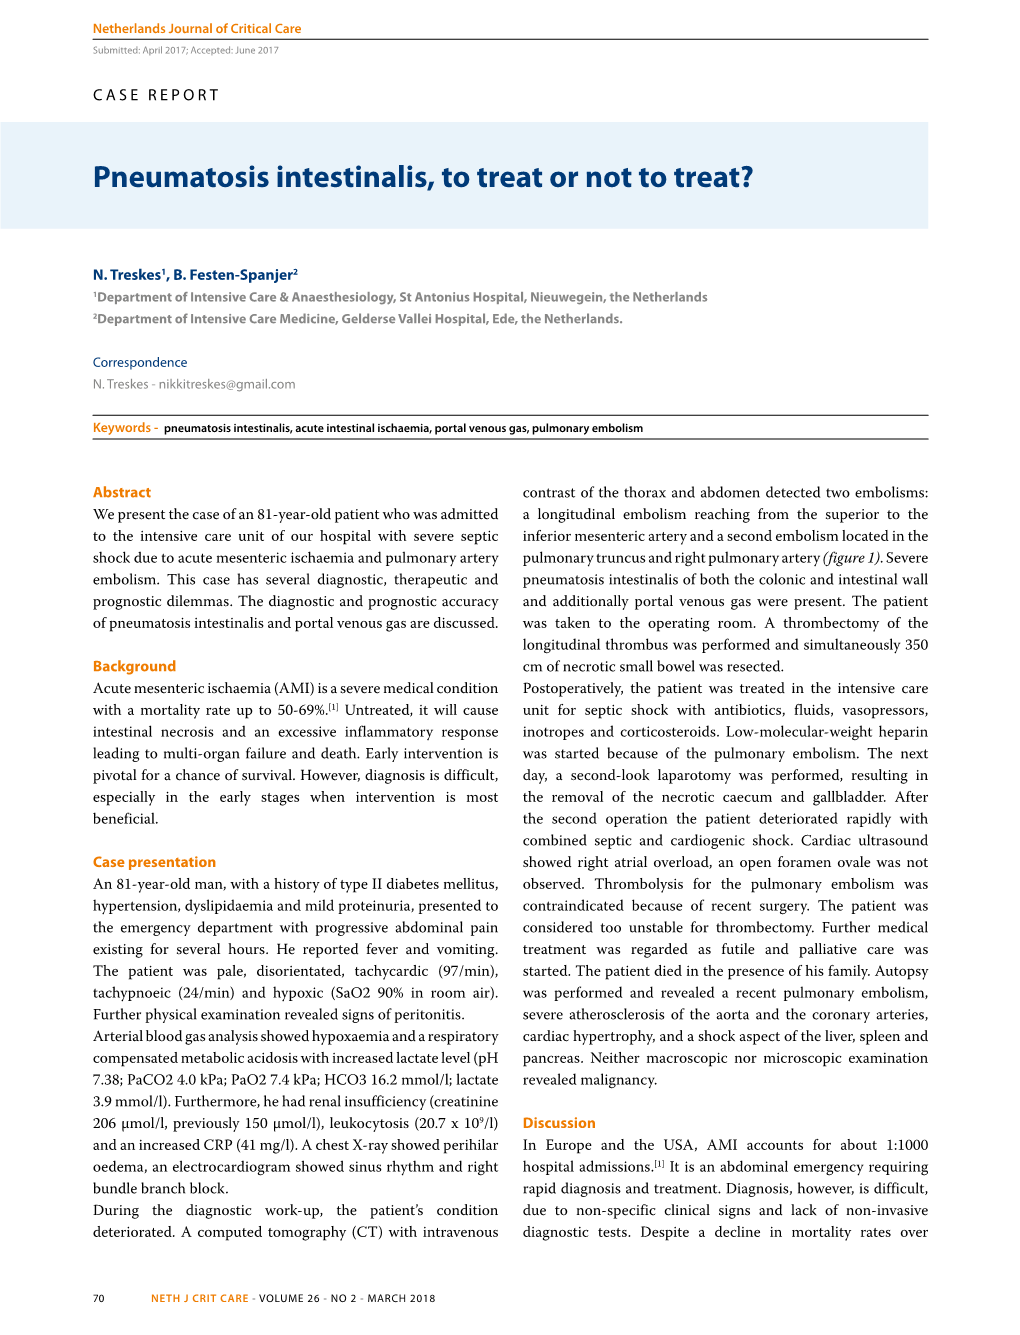 Pneumatosis Intestinalis, to Treat Or Not to Treat?